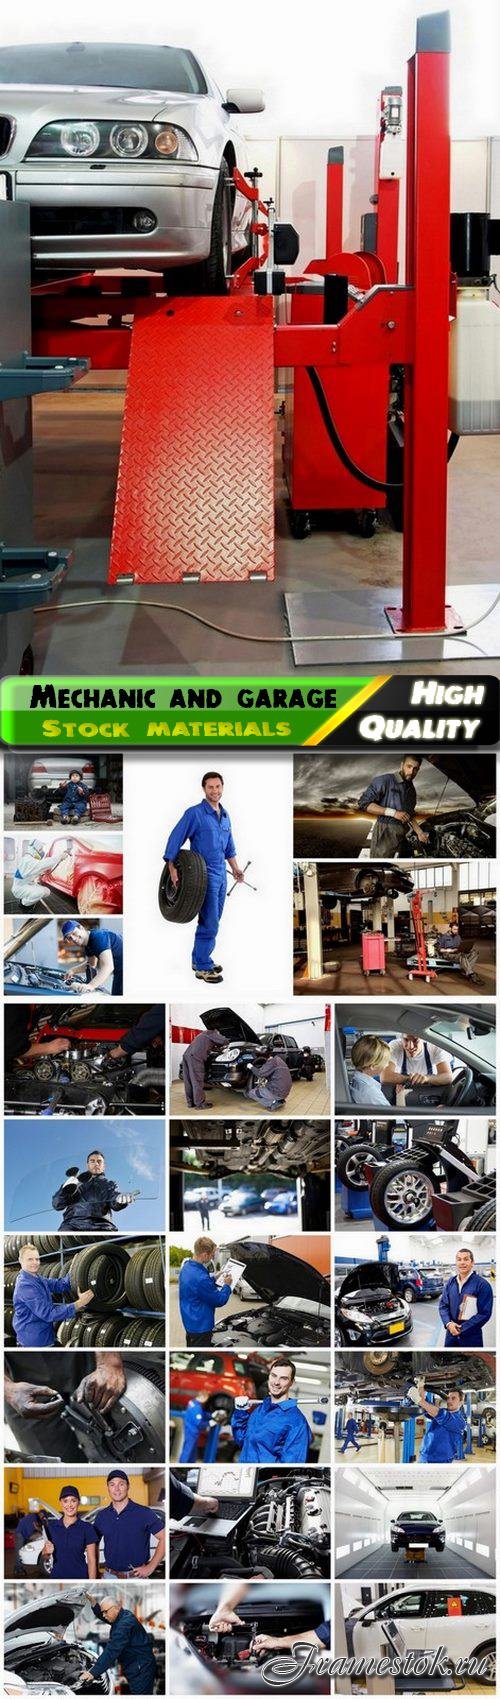 Mechanic and garage auto service and car repair - 25 HQ Jpg